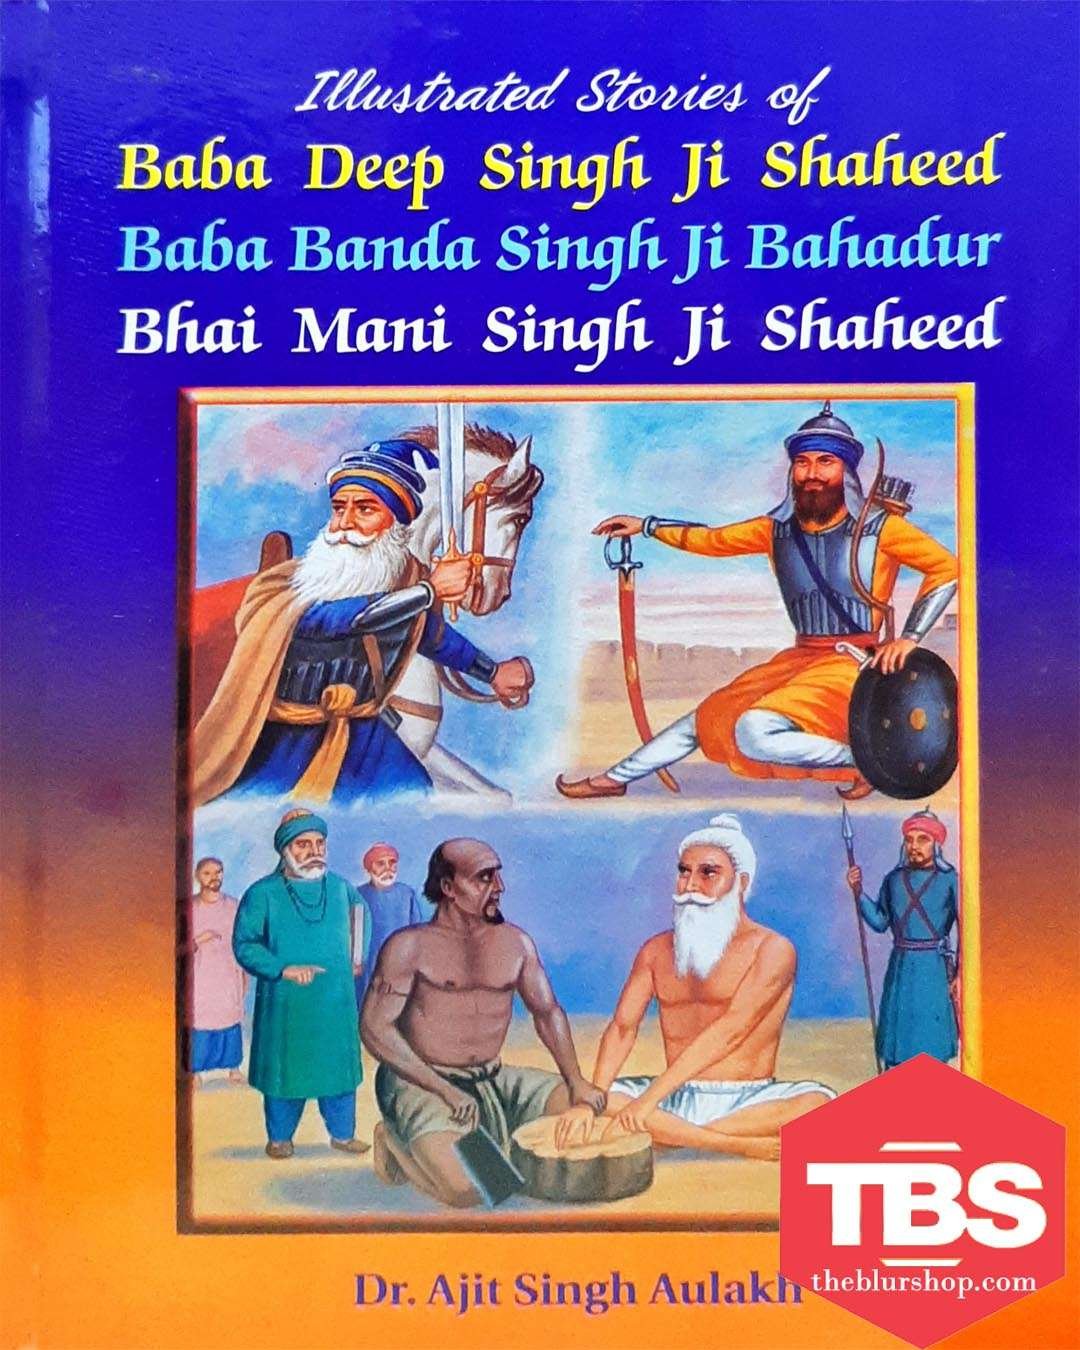 Illustrated Stories of Baba Deep Singh Ji Shaheed, Baba Banda Singh Bahadur, Bhai Mani Singh Ji Shaheed